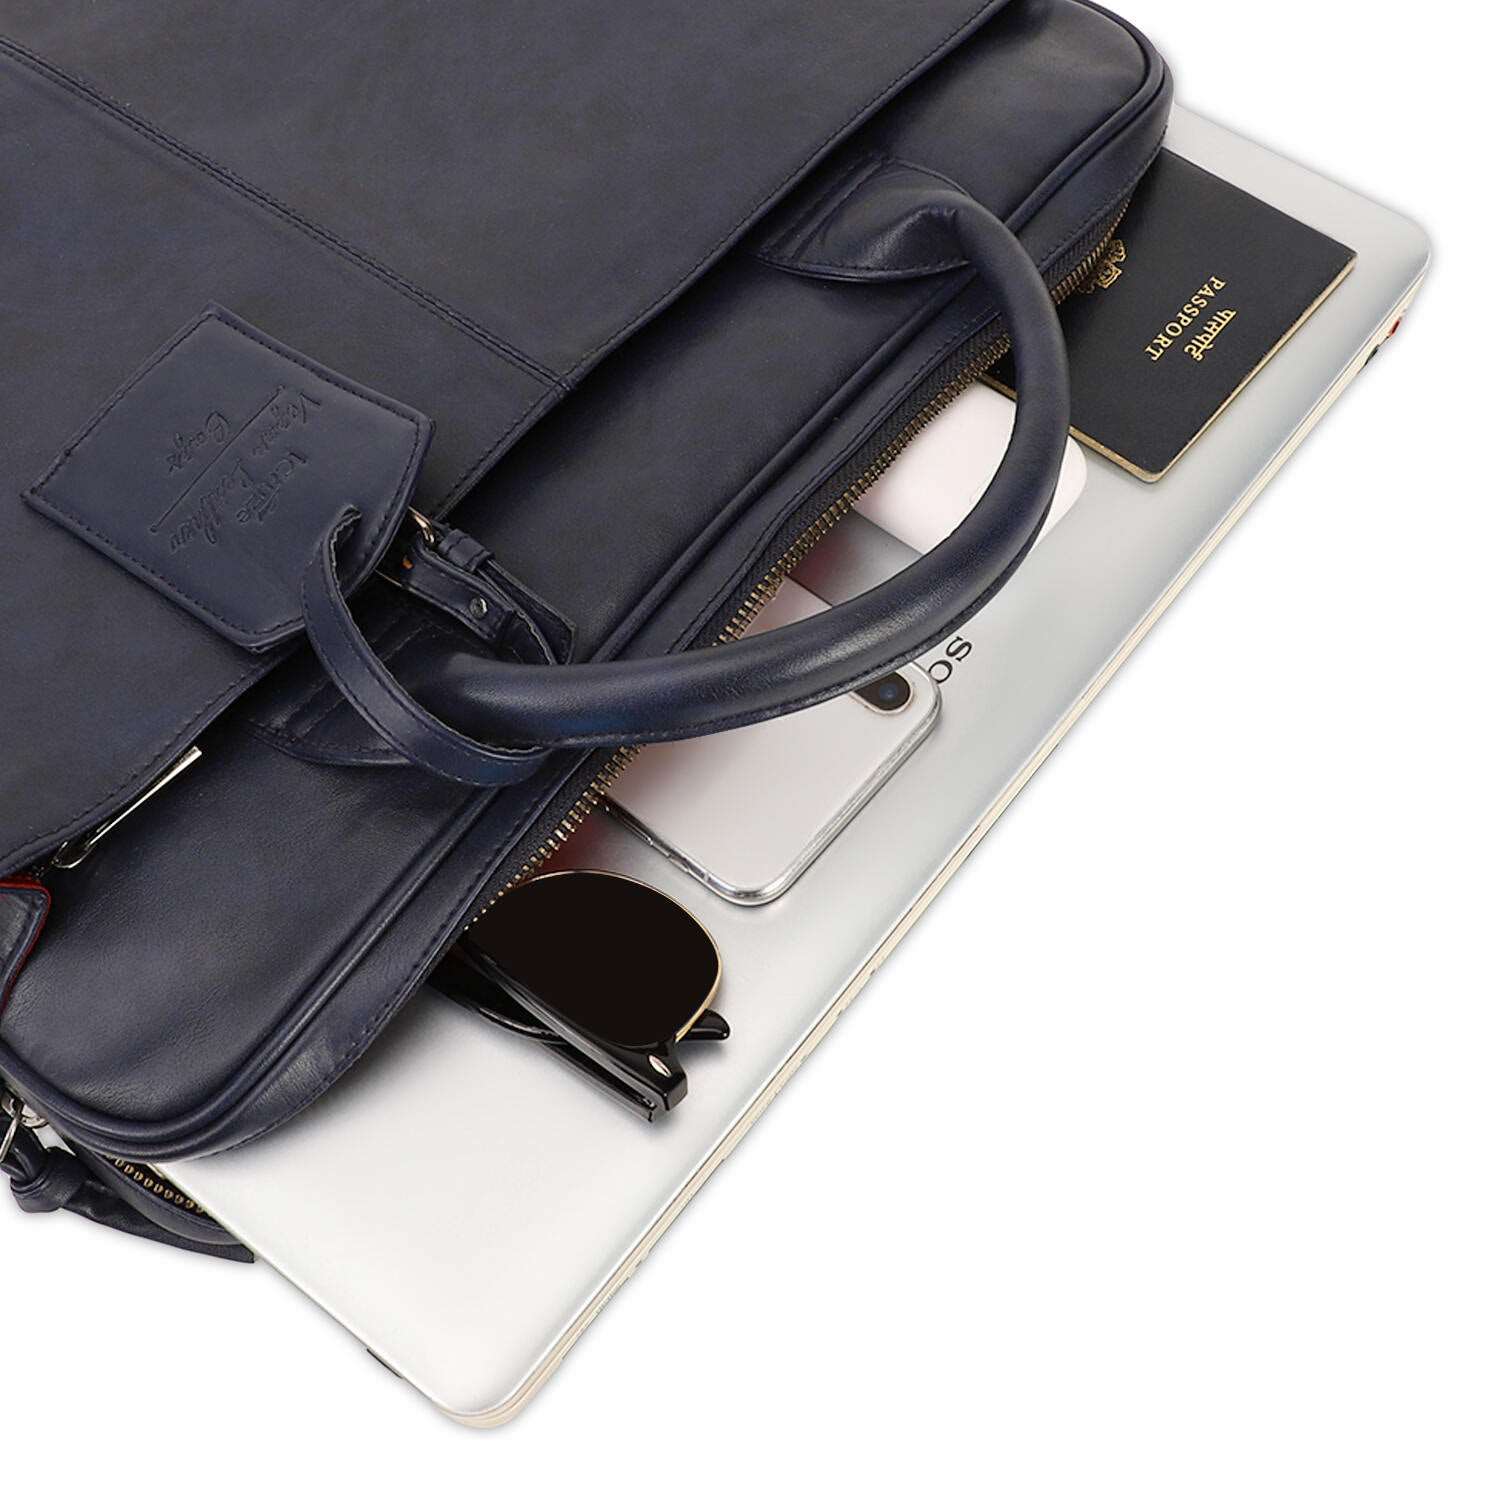 iCruze Elite Slim 15 inch Messenger Bag Blue - iCruze